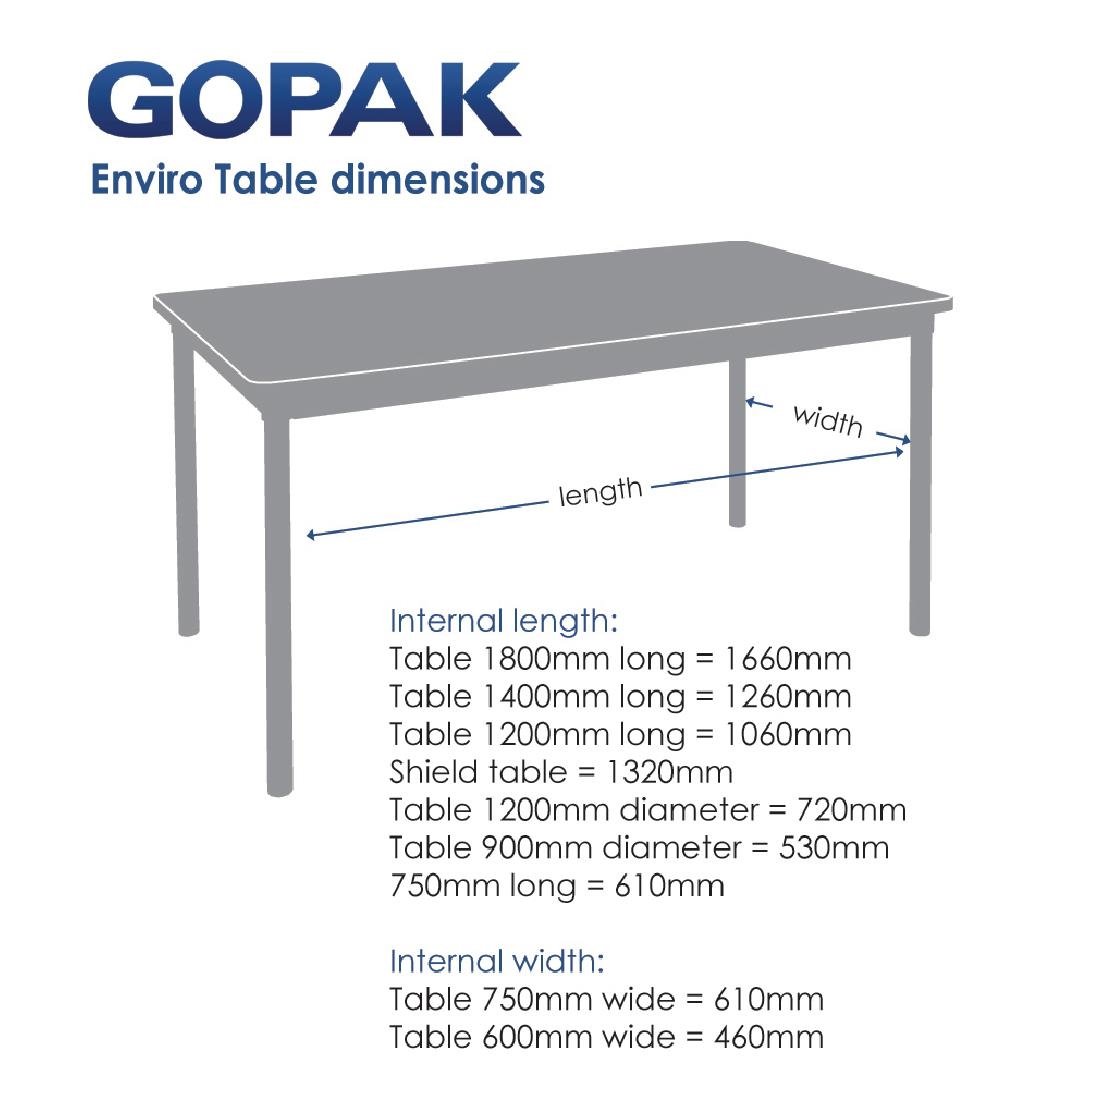 Gopak Enviro Indoor Campanula Blue Square Dining Table 750mm JD Catering Equipment Solutions Ltd